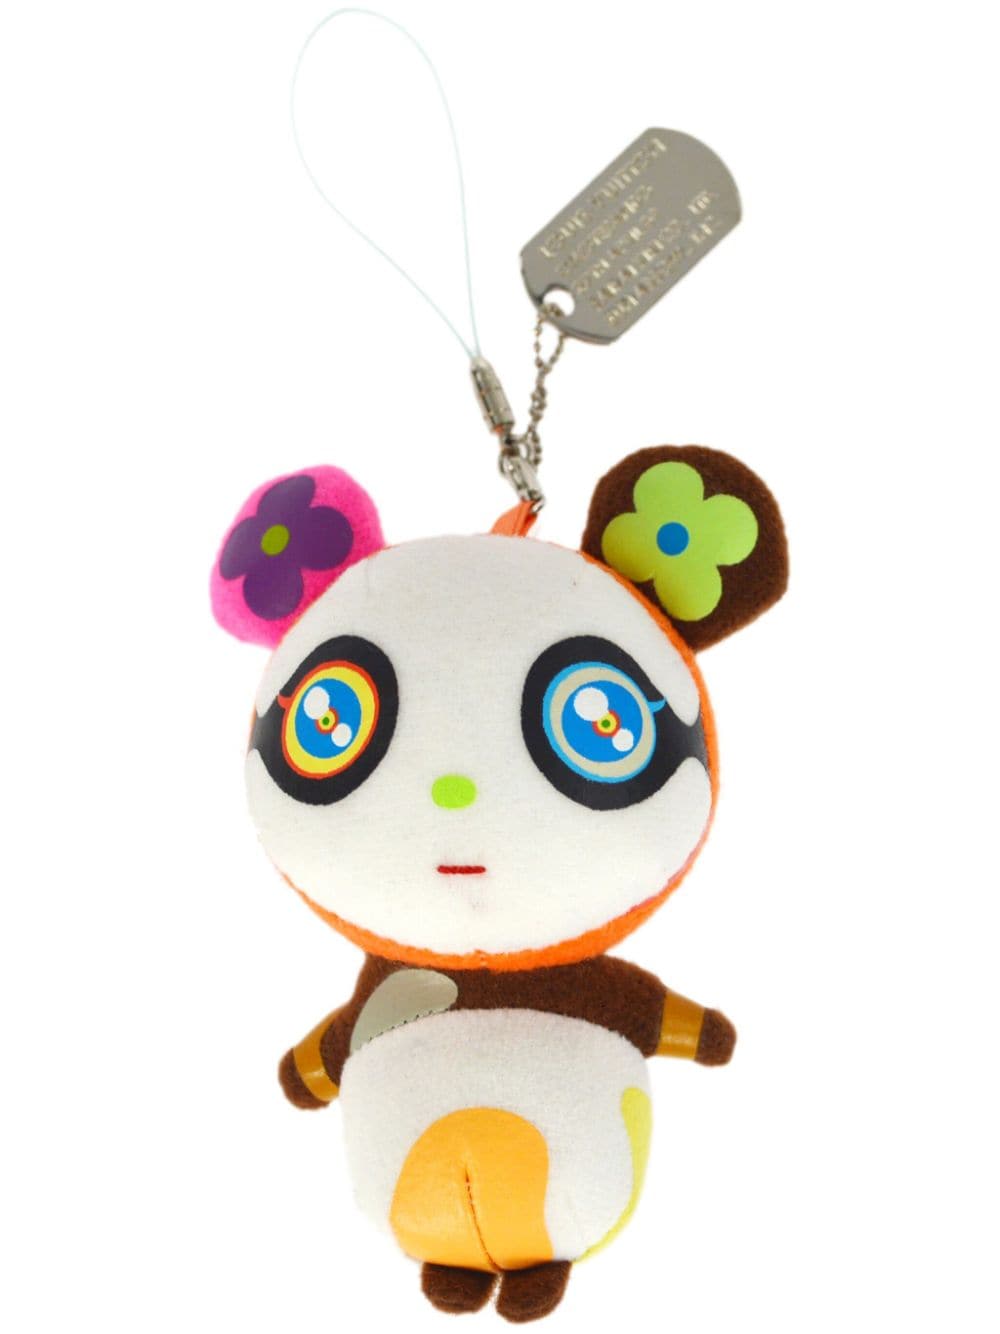 1990-2000s Panda bag charm